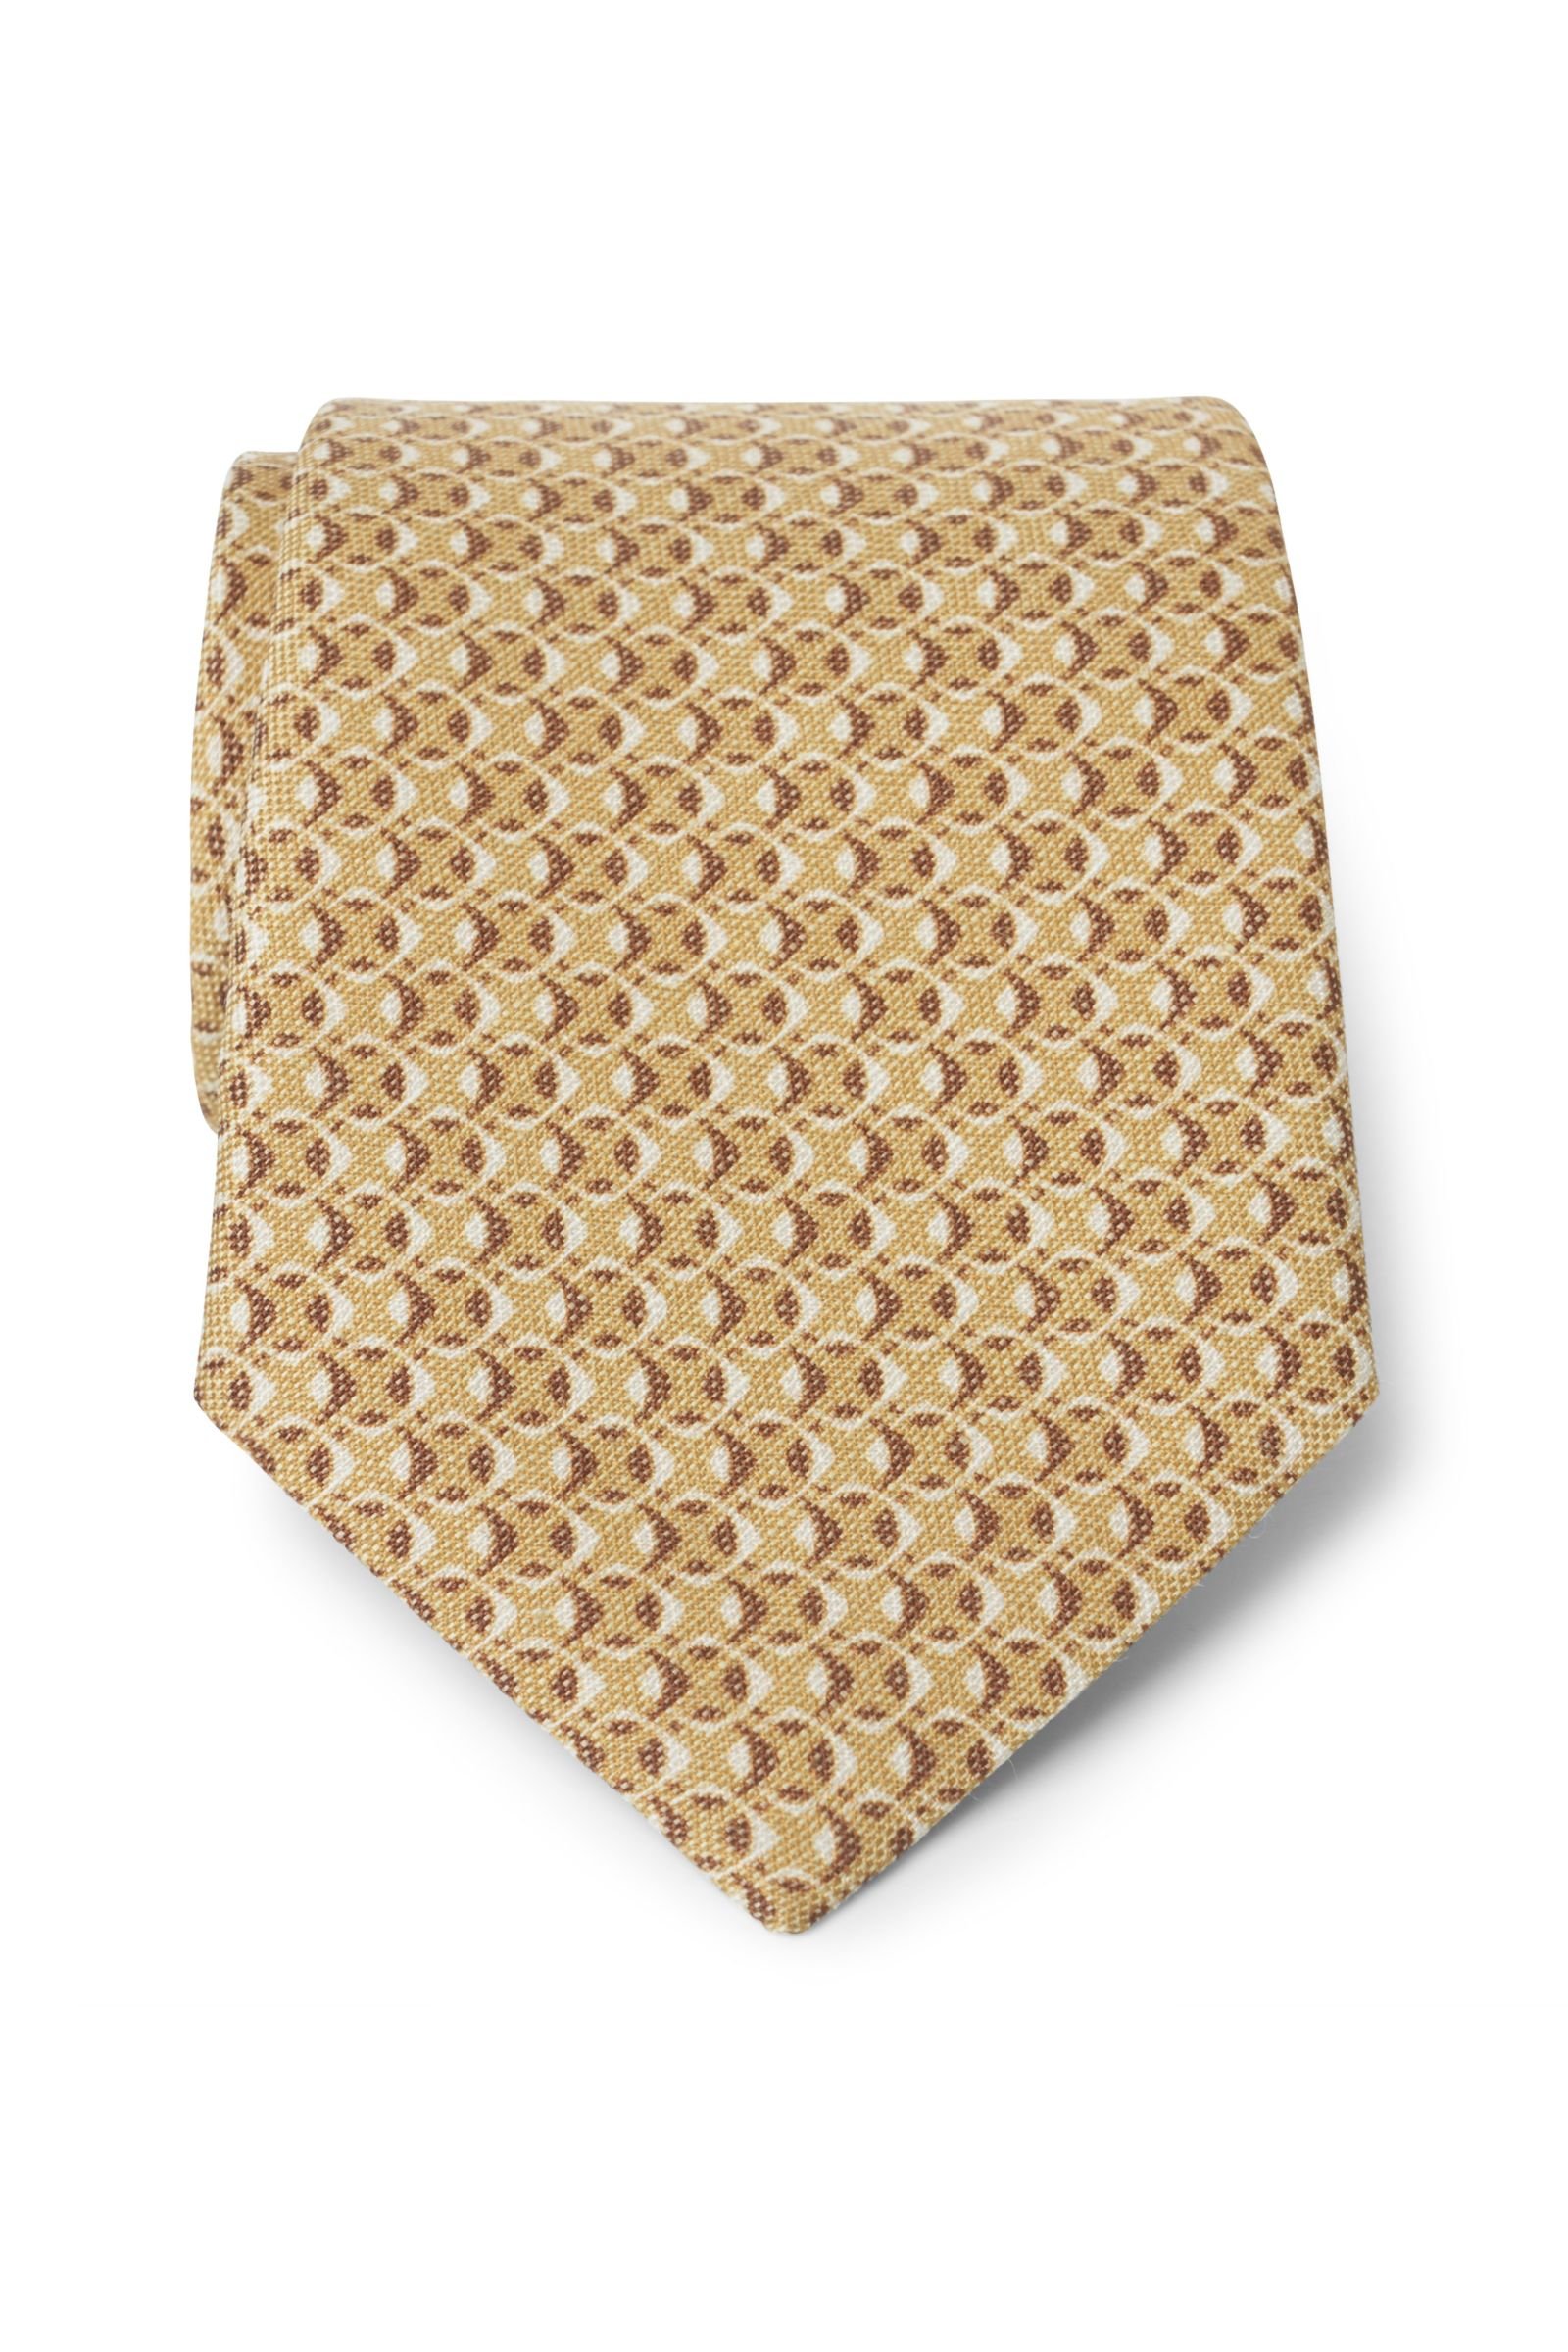 Krawatte ocker/braun gemustert